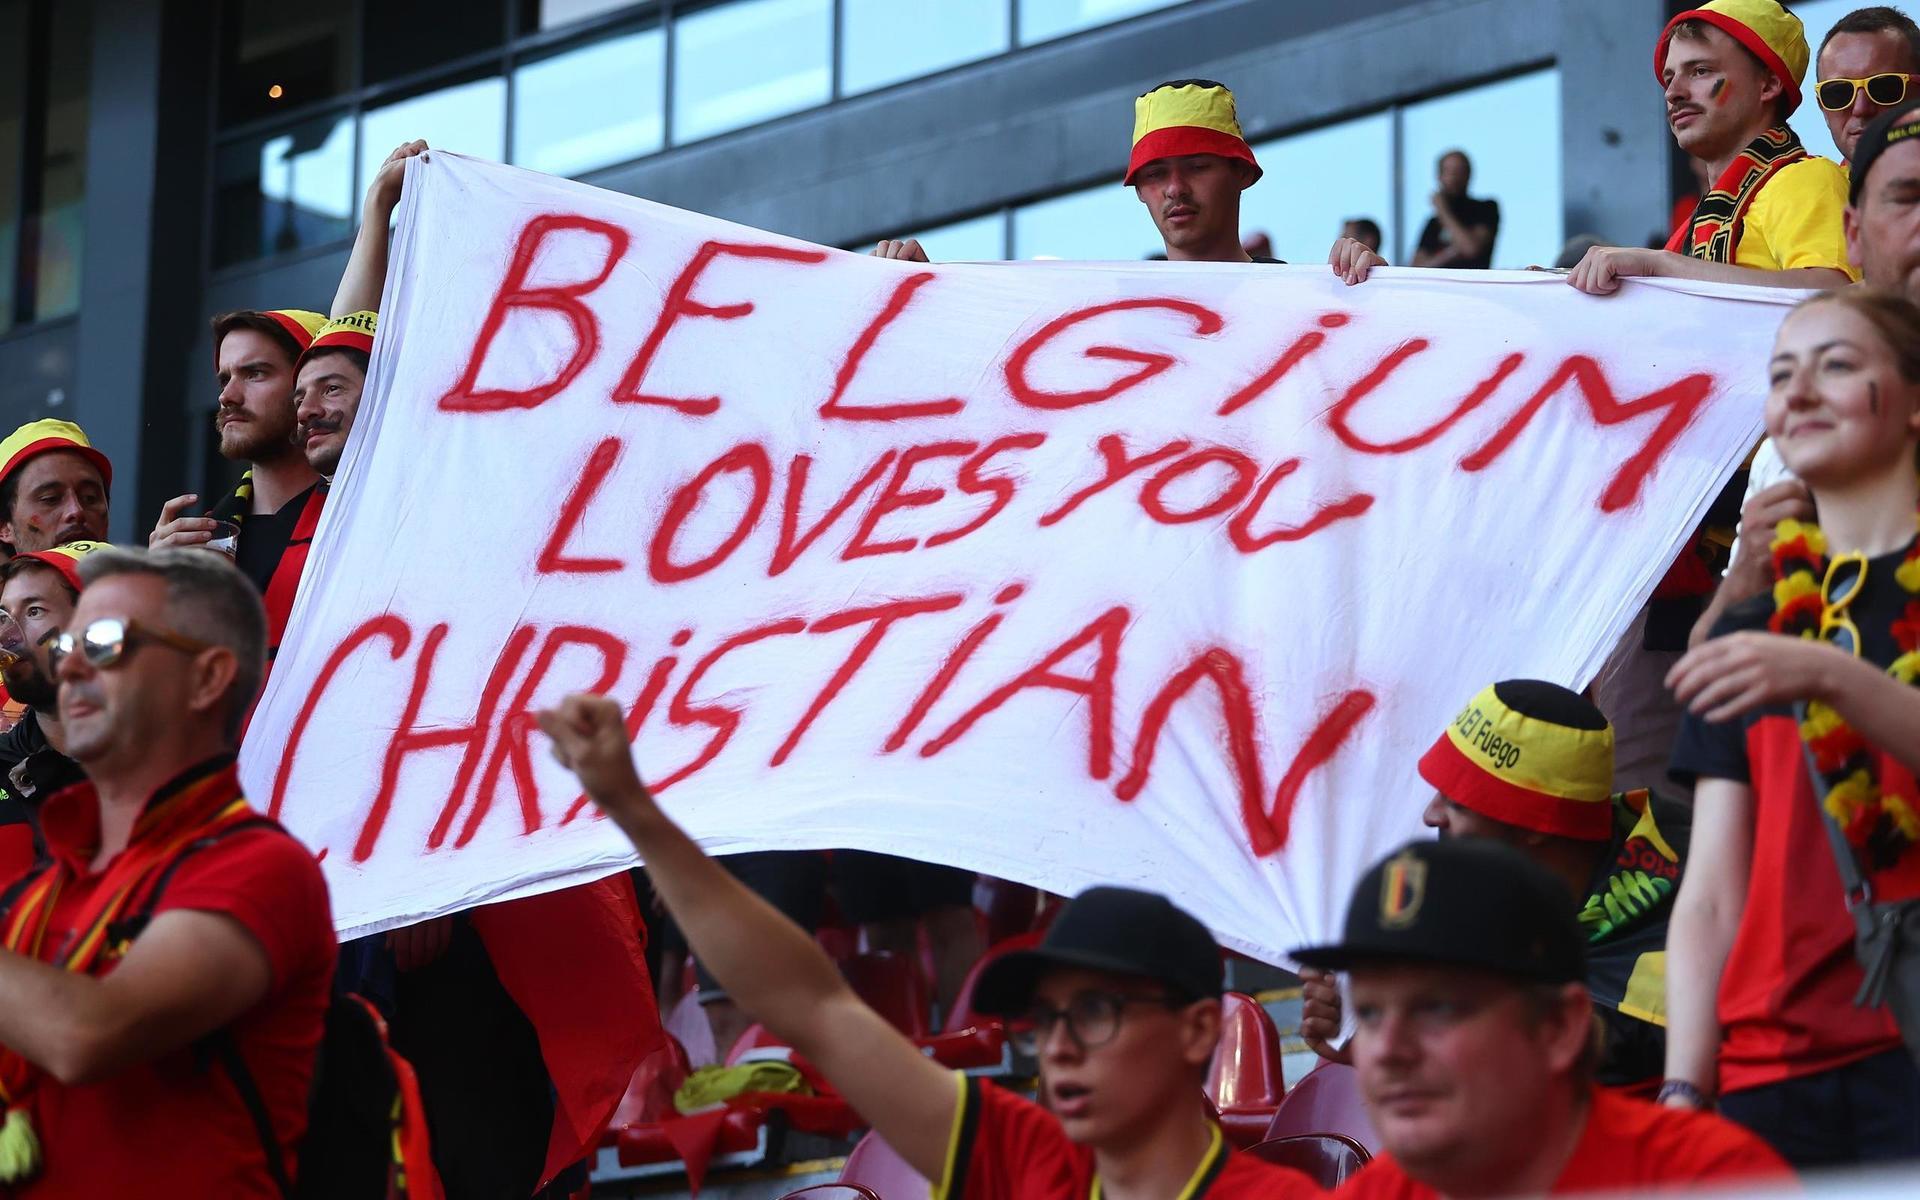 ”Belgien älskar Christian” stod det på ett lakan. 